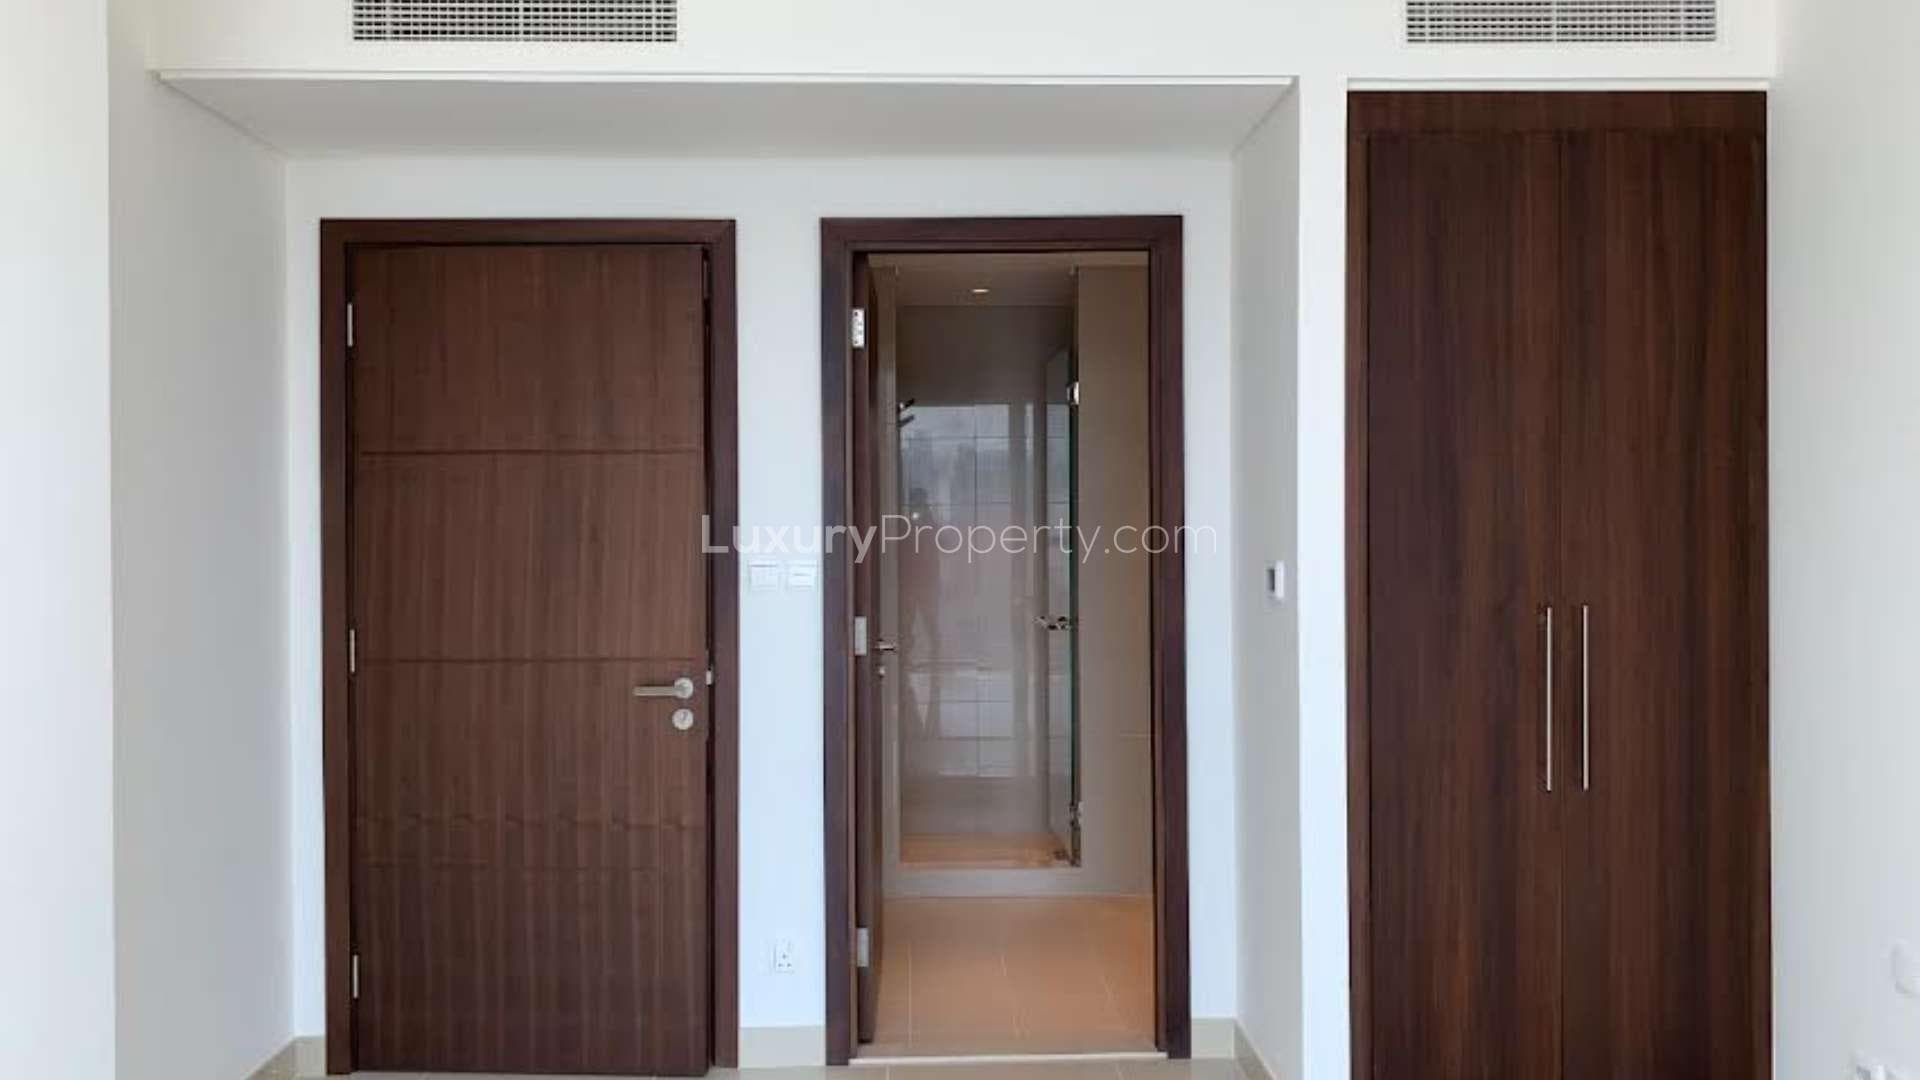 3 Bedroom Apartment For Rent Arabella Townhouses 2 Lp36472 236b141275d09e00.jpg